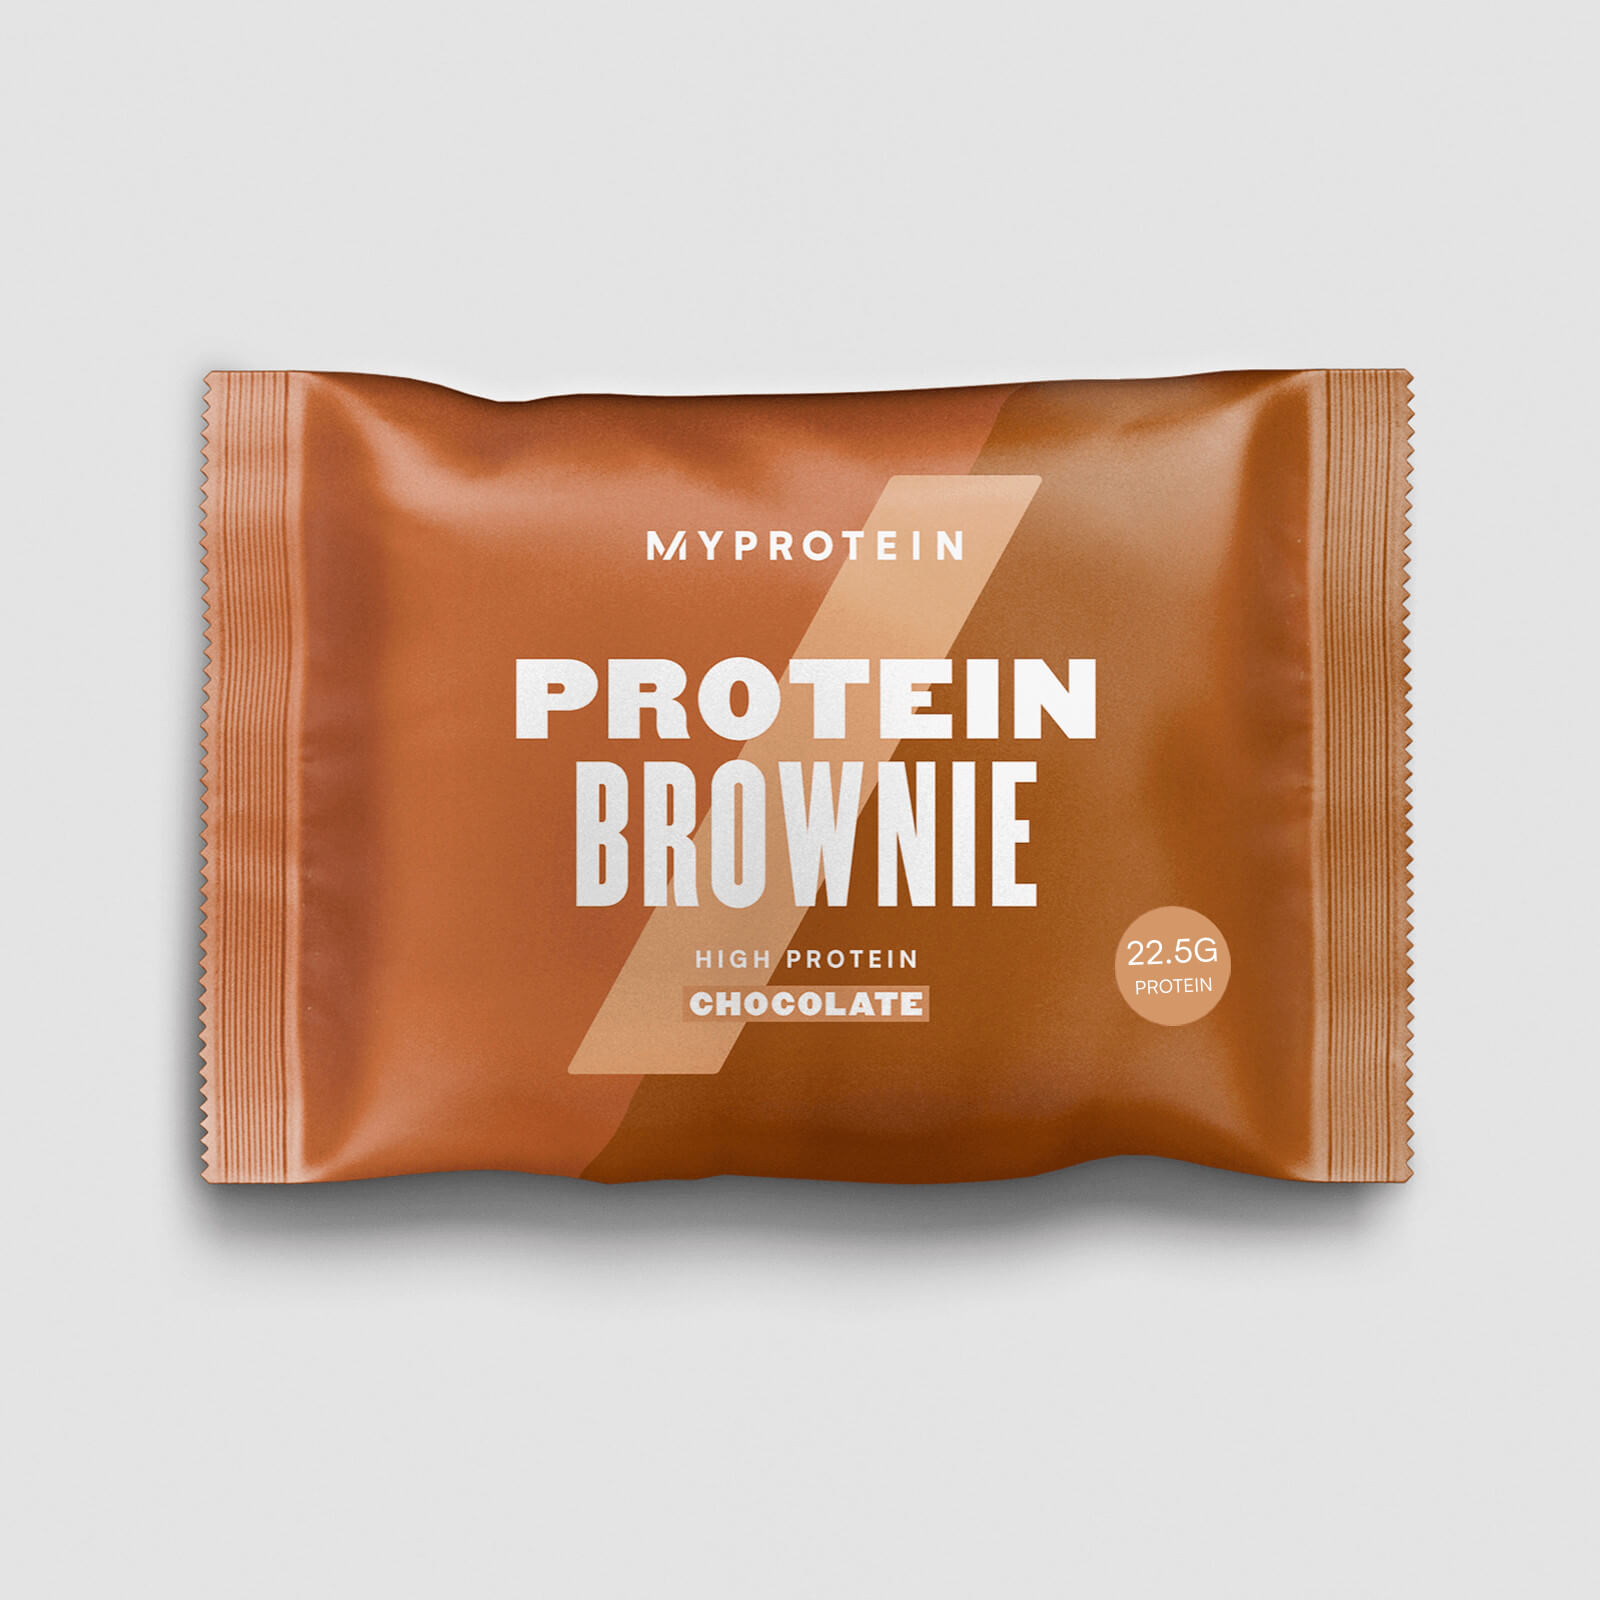 Protein Brownie (Sample) - Chocolate